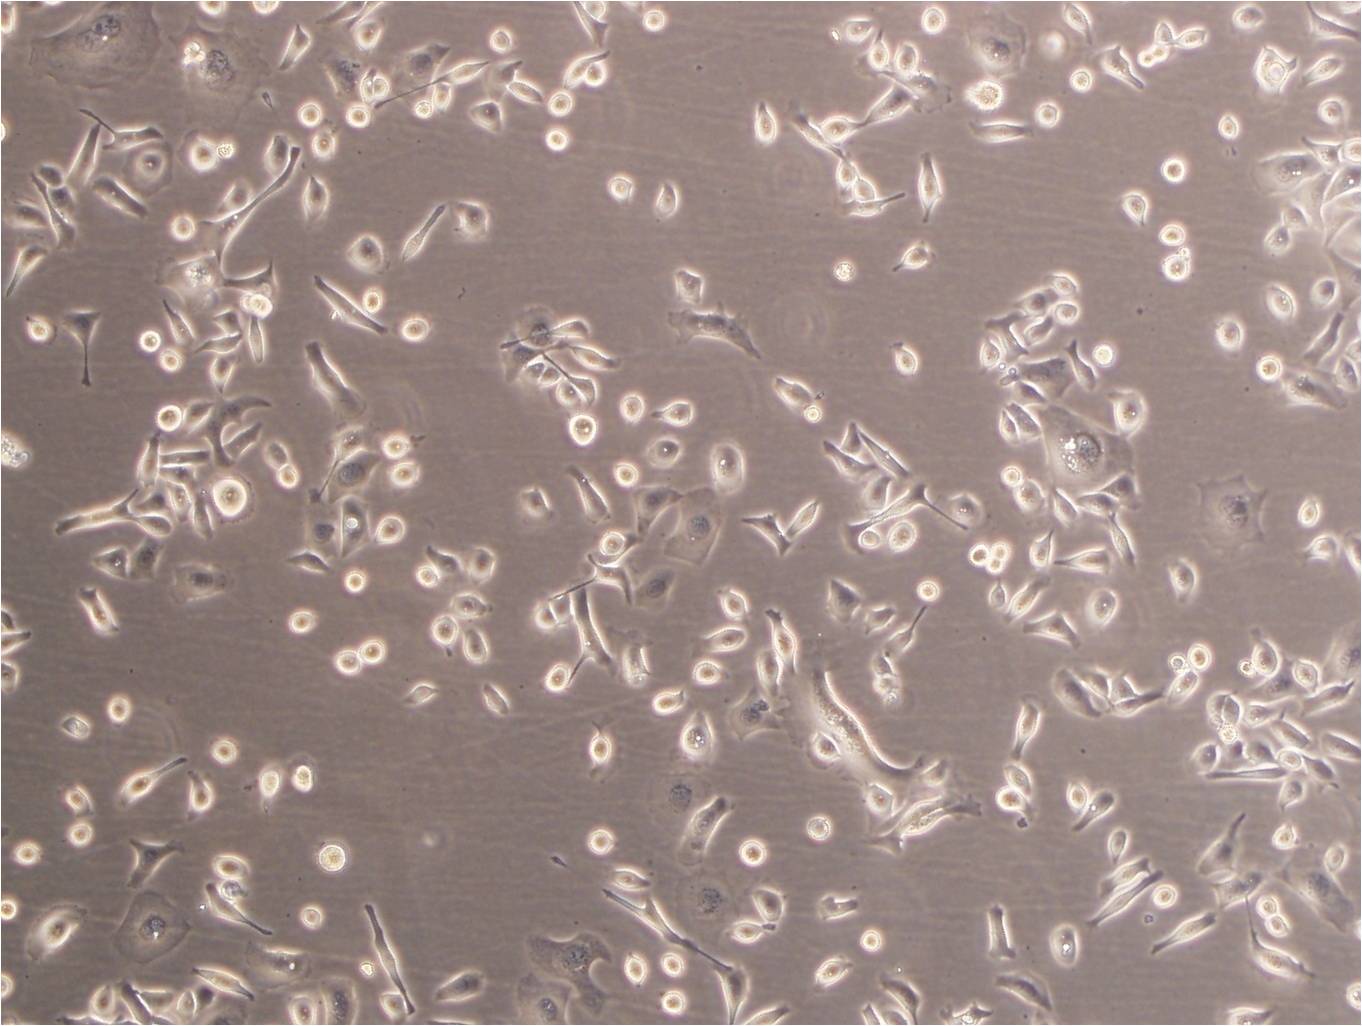 J82 epithelioid cells人膀胱移行癌细胞系,J82 epithelioid cells